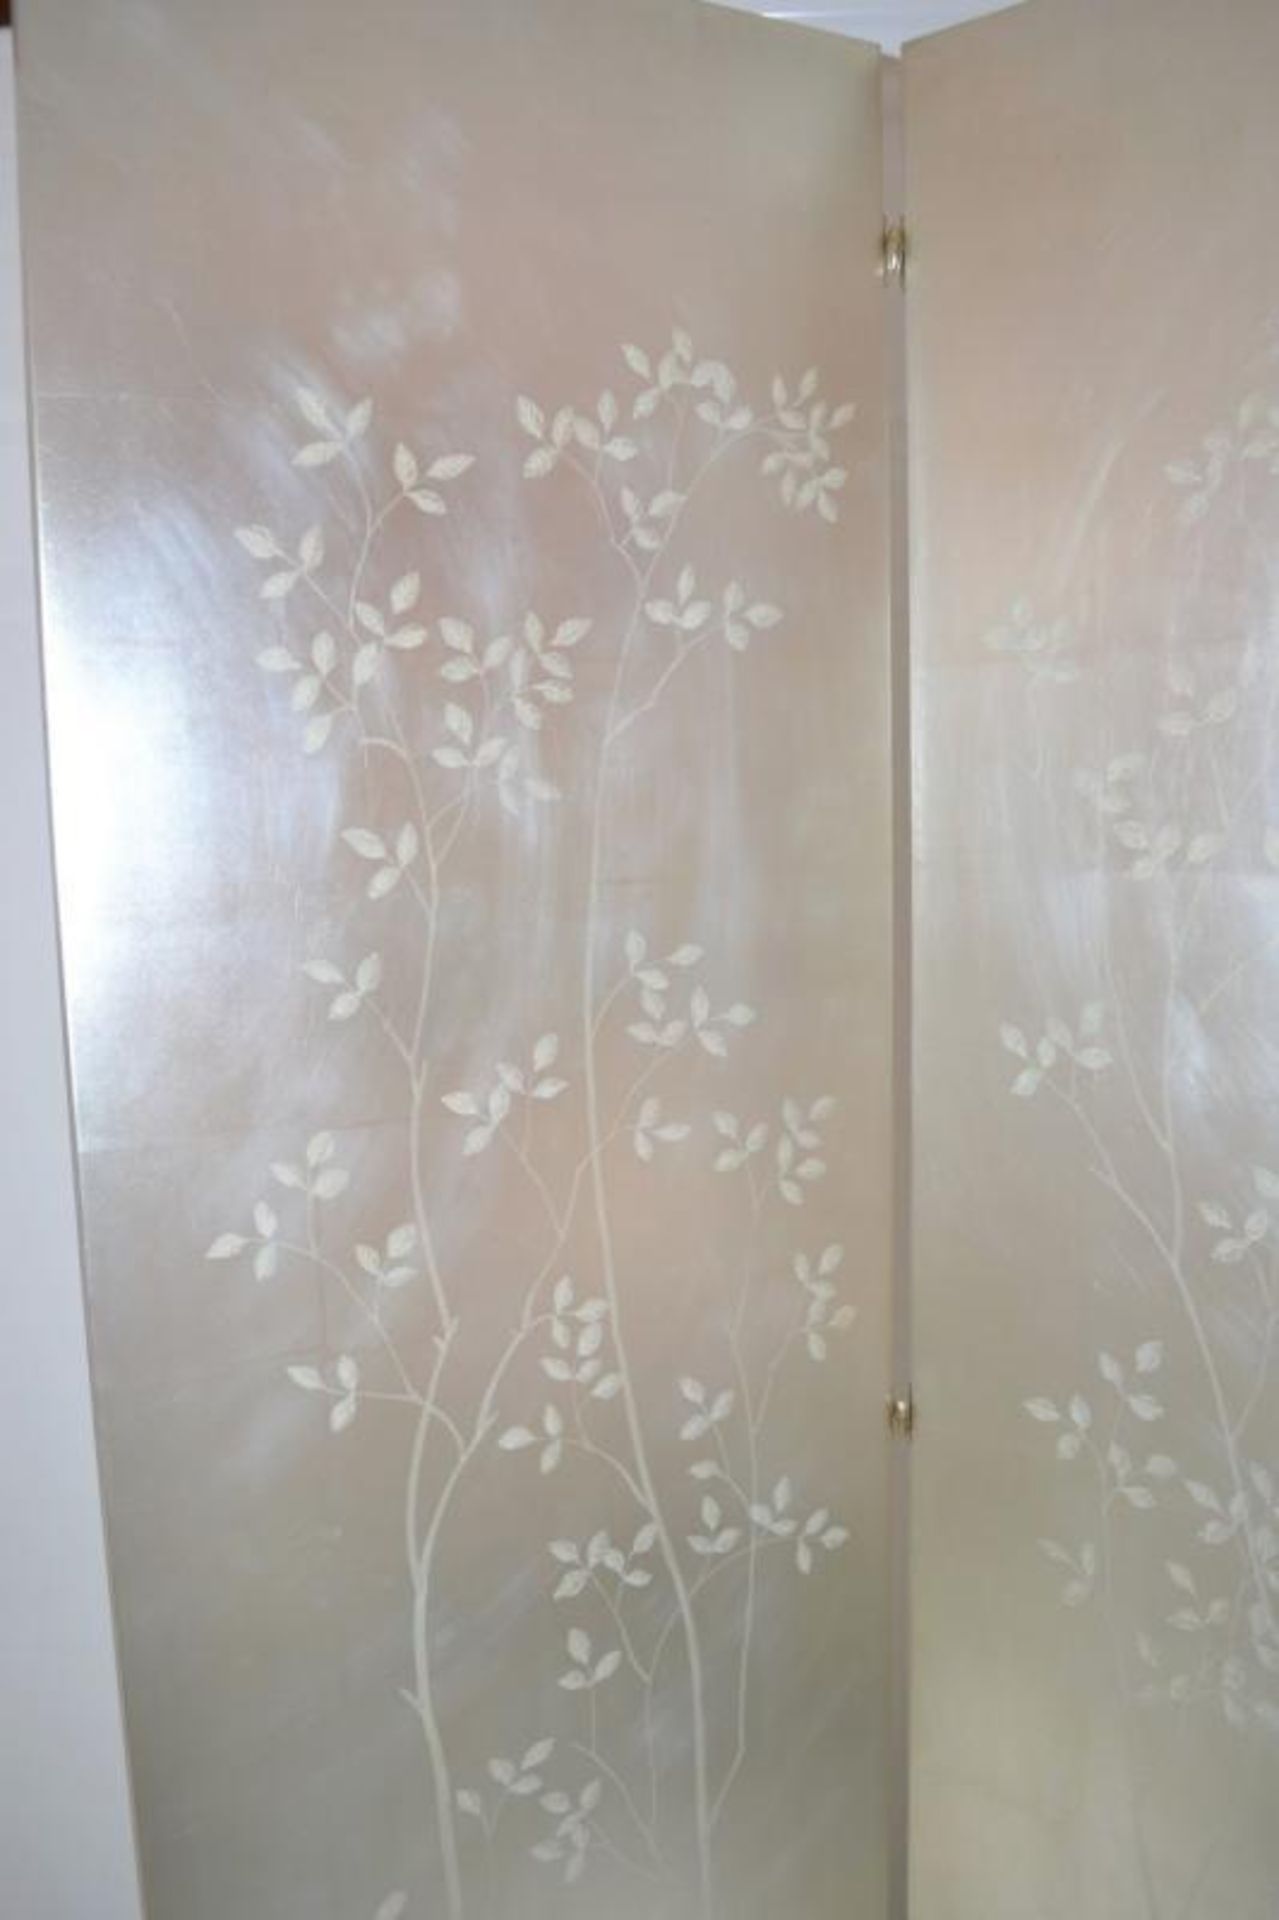 1 x BARBARA BARRY FOR HENREDON Silver 2-Leaf Hindged Boudoir Dressing Screen - Ref: 2720071 NP1/18 - - Image 4 of 11